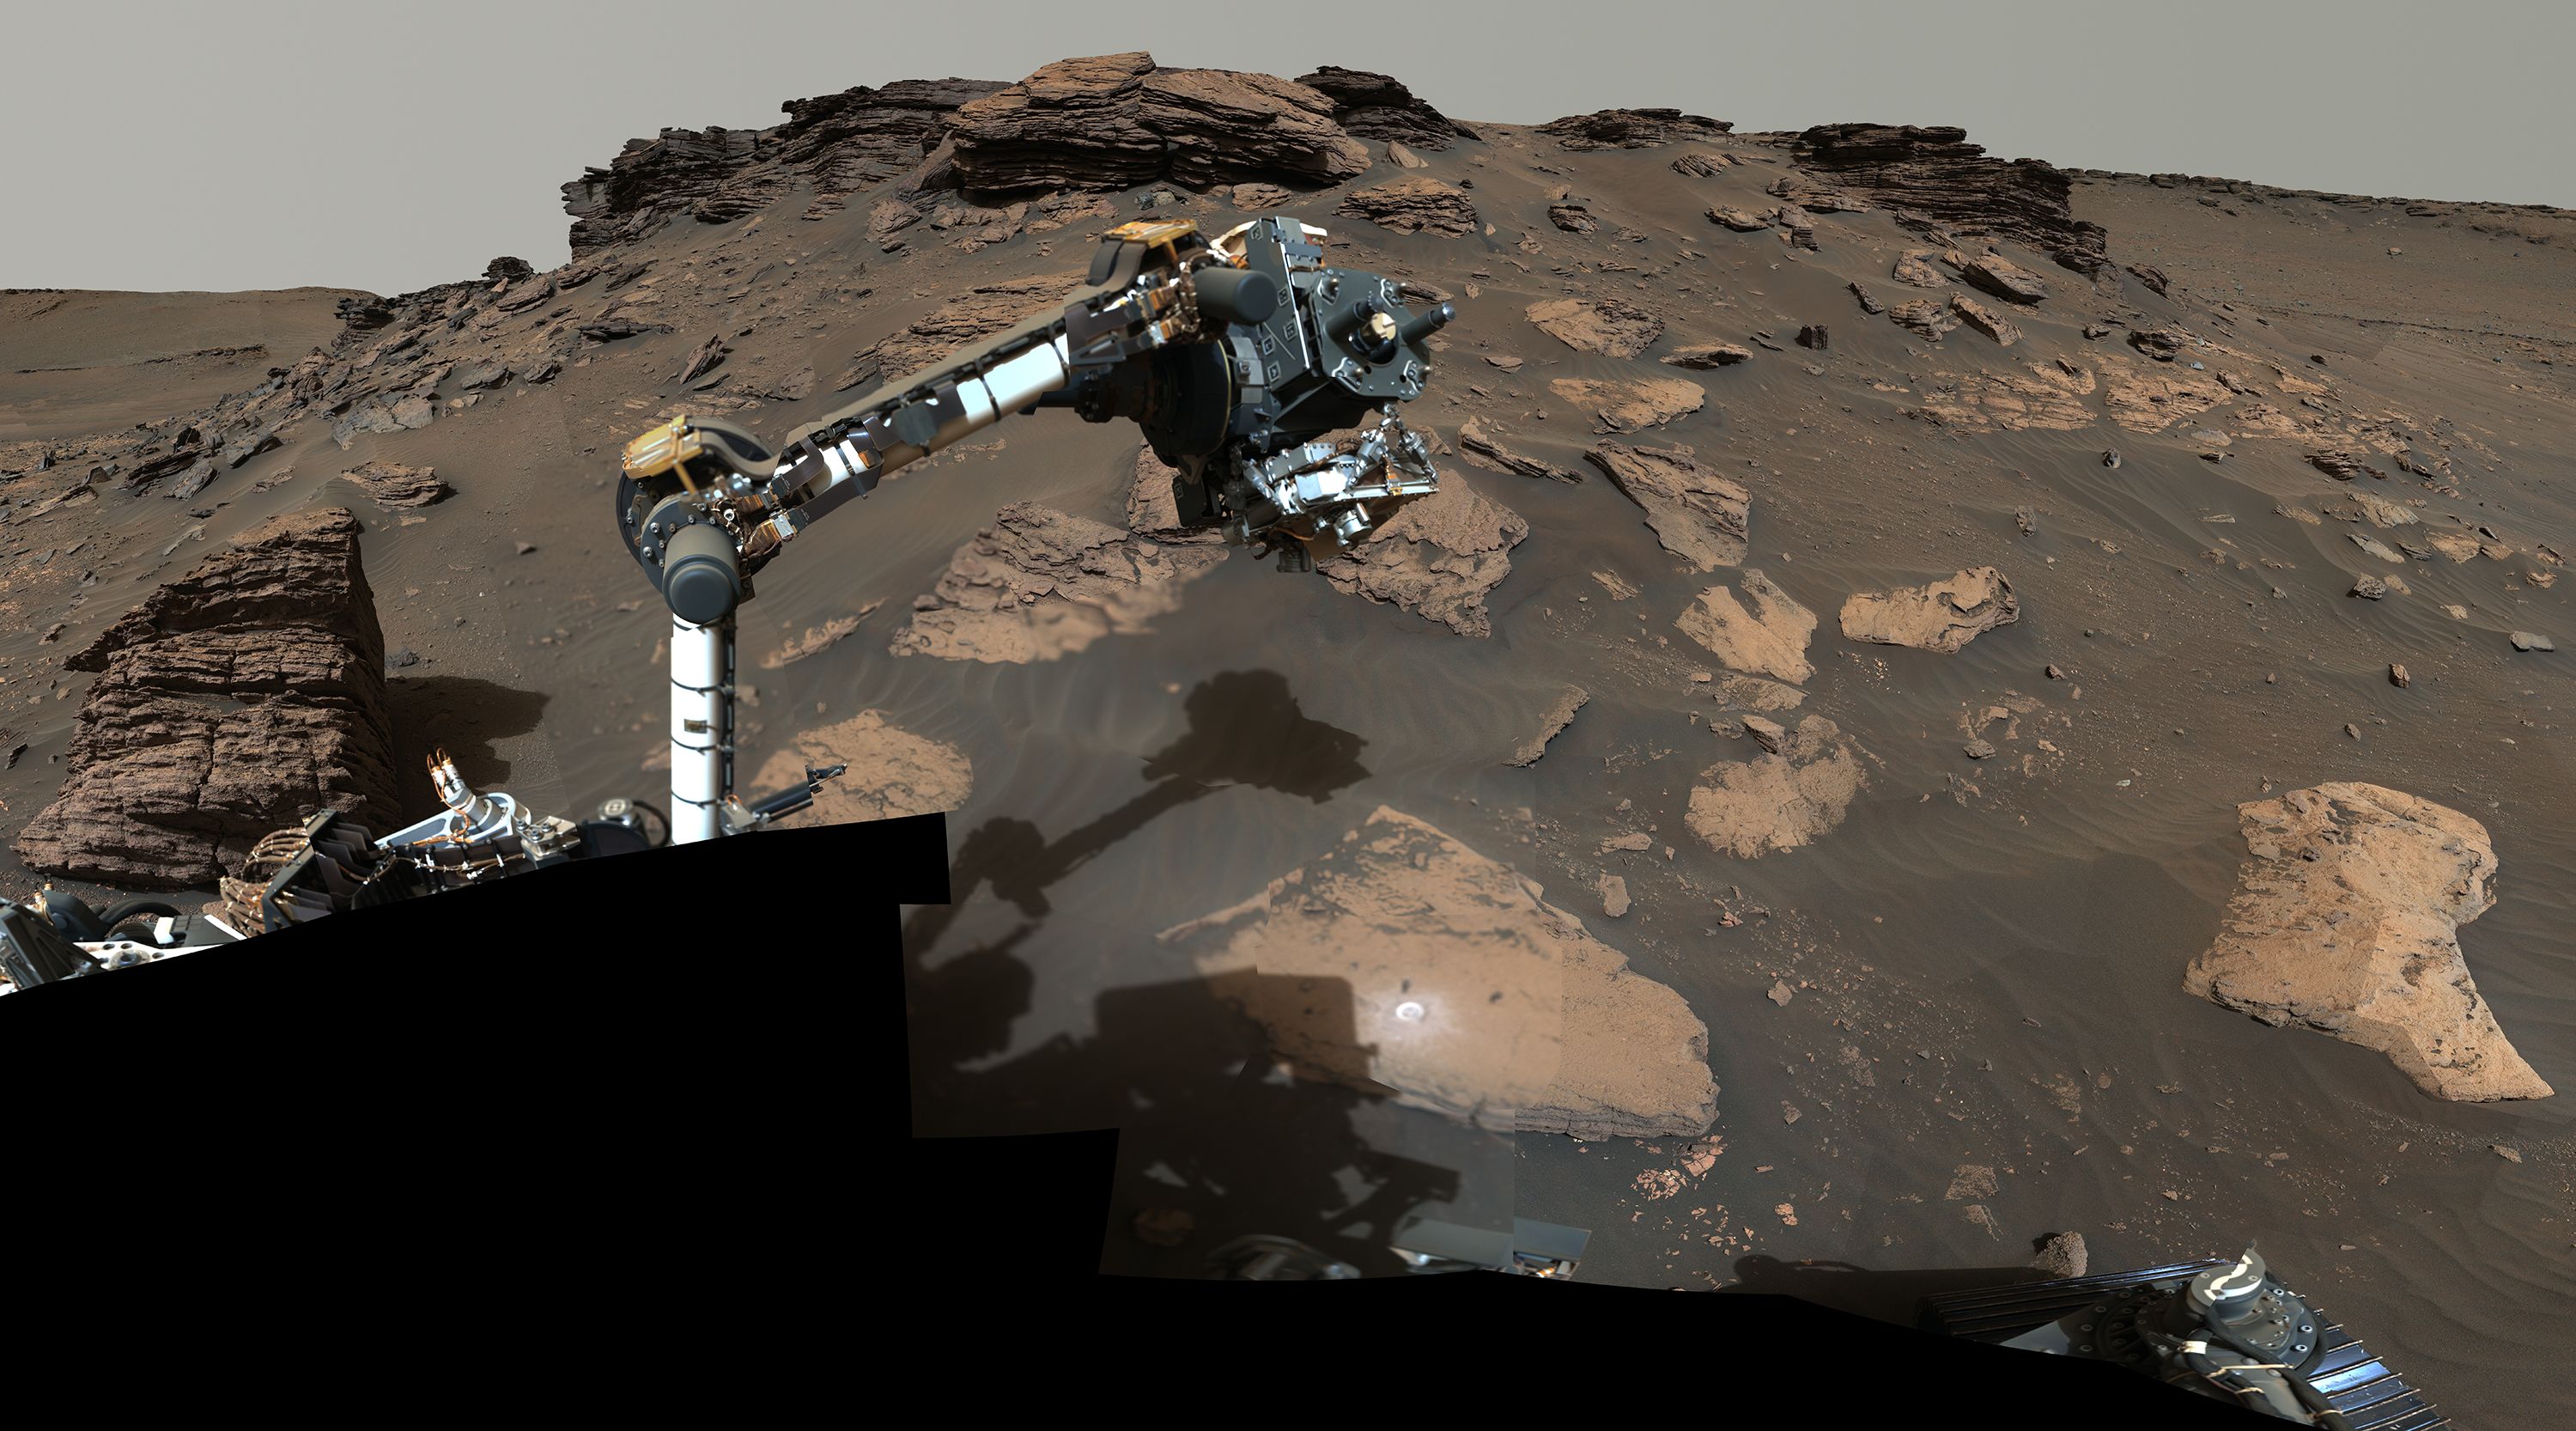 Sunanda Sharma Xxx Video - Perseverance rover finds organic matter 'treasure' on Mars | CNN